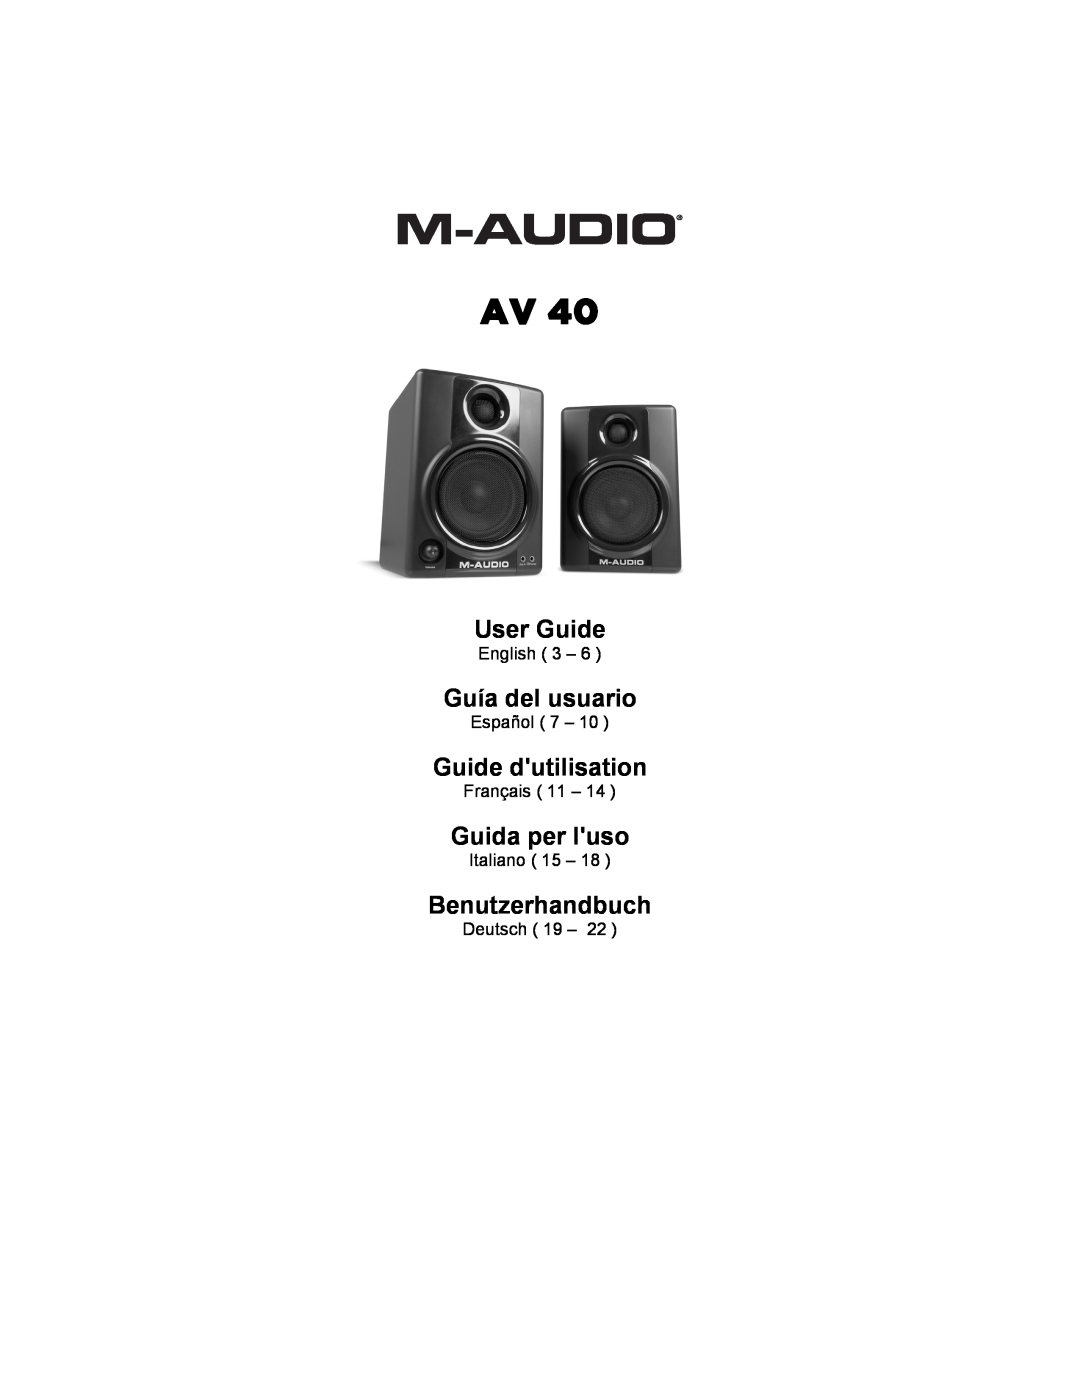 M-Audio AV 40 manual User Guide, Guía del usuario, Guide dutilisation, Guida per luso, Benutzerhandbuch, English, Español 